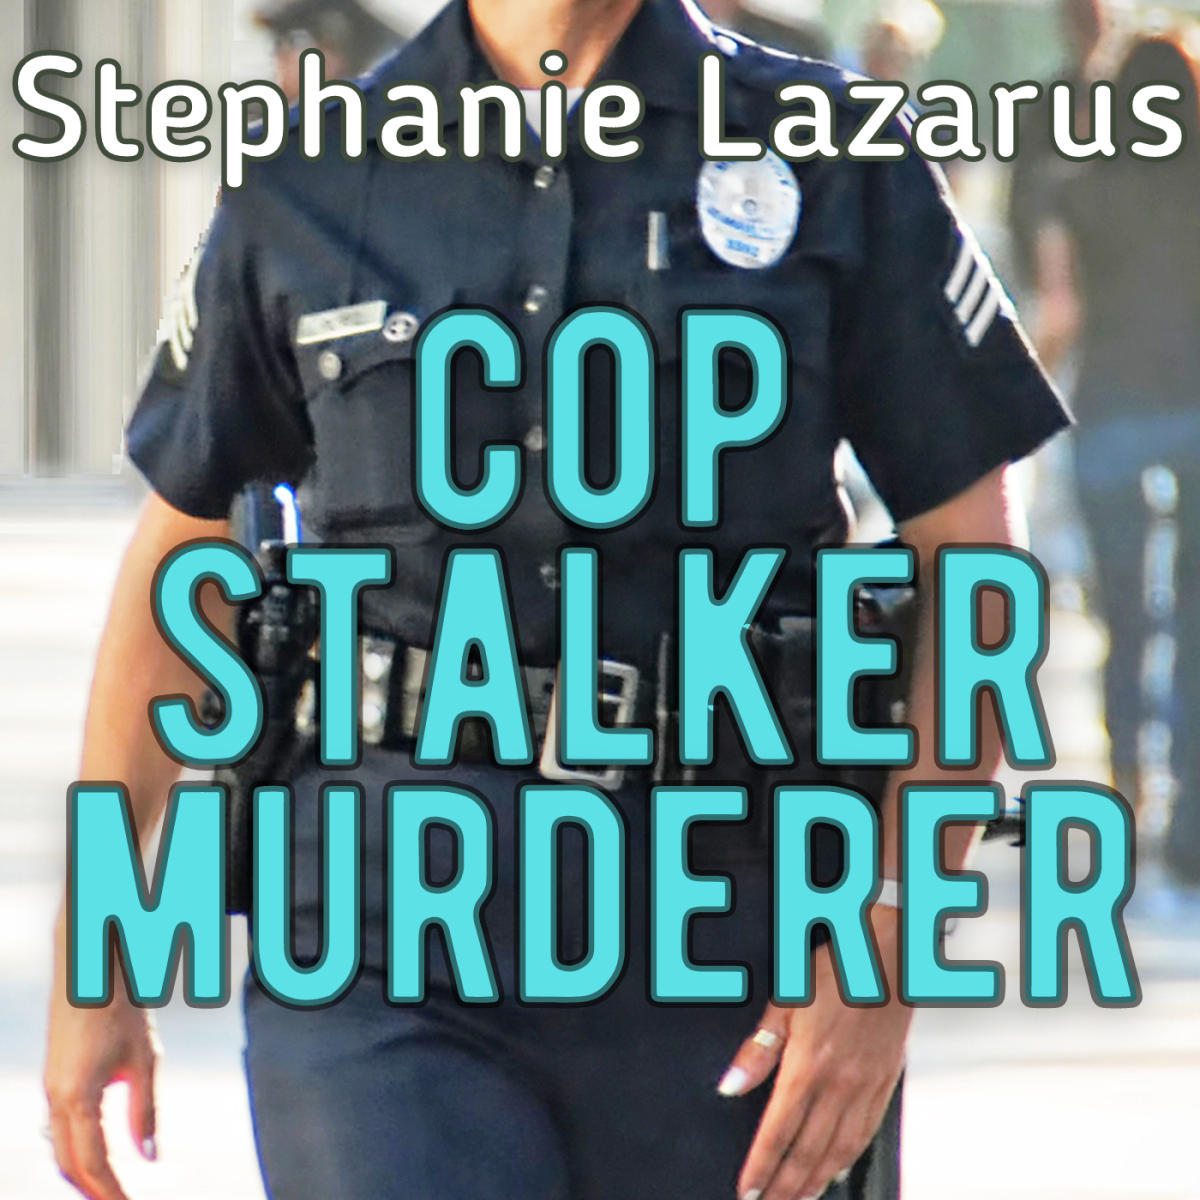 Sherri Rasmussen: Murdered by Stalker Stephanie Lazarus of the LAPD